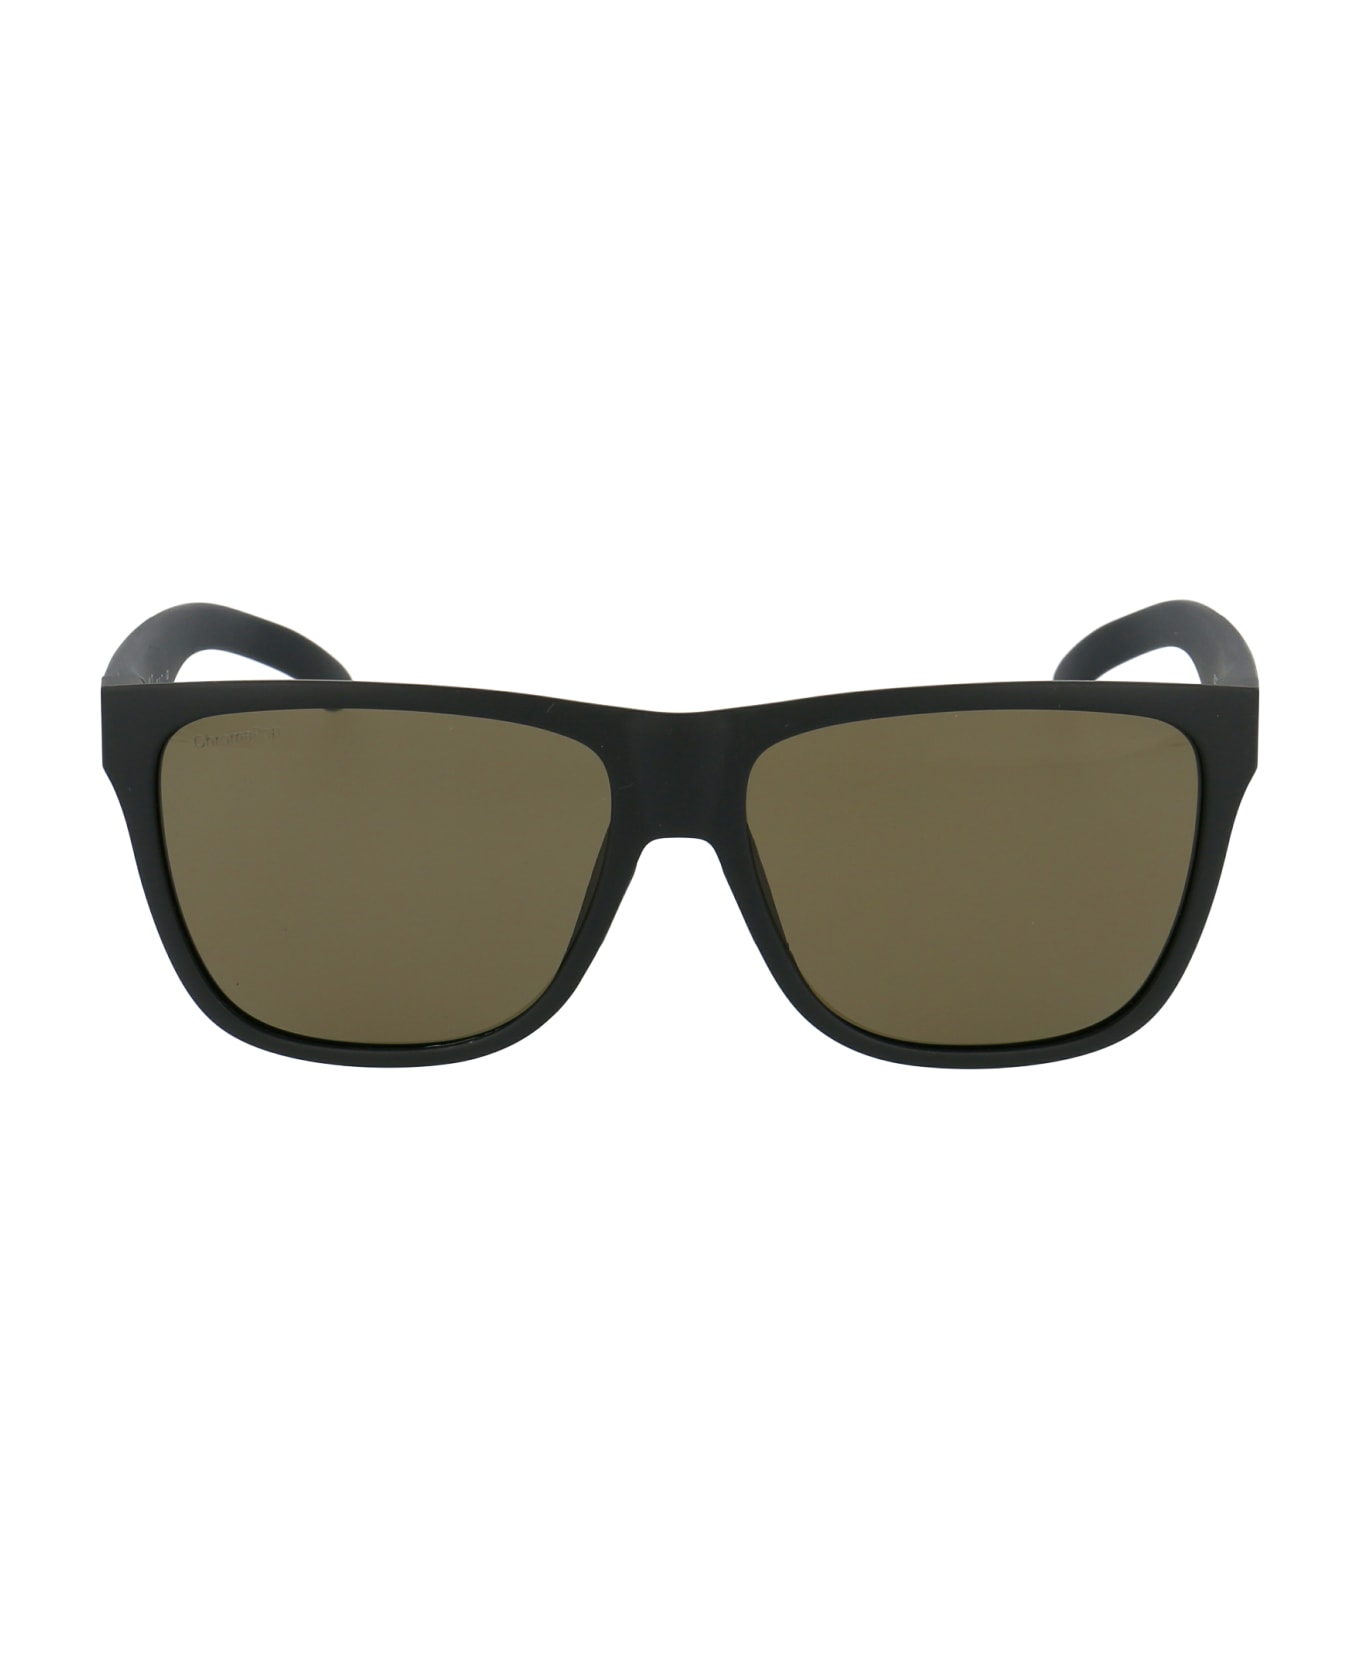 Smith Lowdown Xl 2 Sunglasses - 003L7 MATT BLACK サングラス